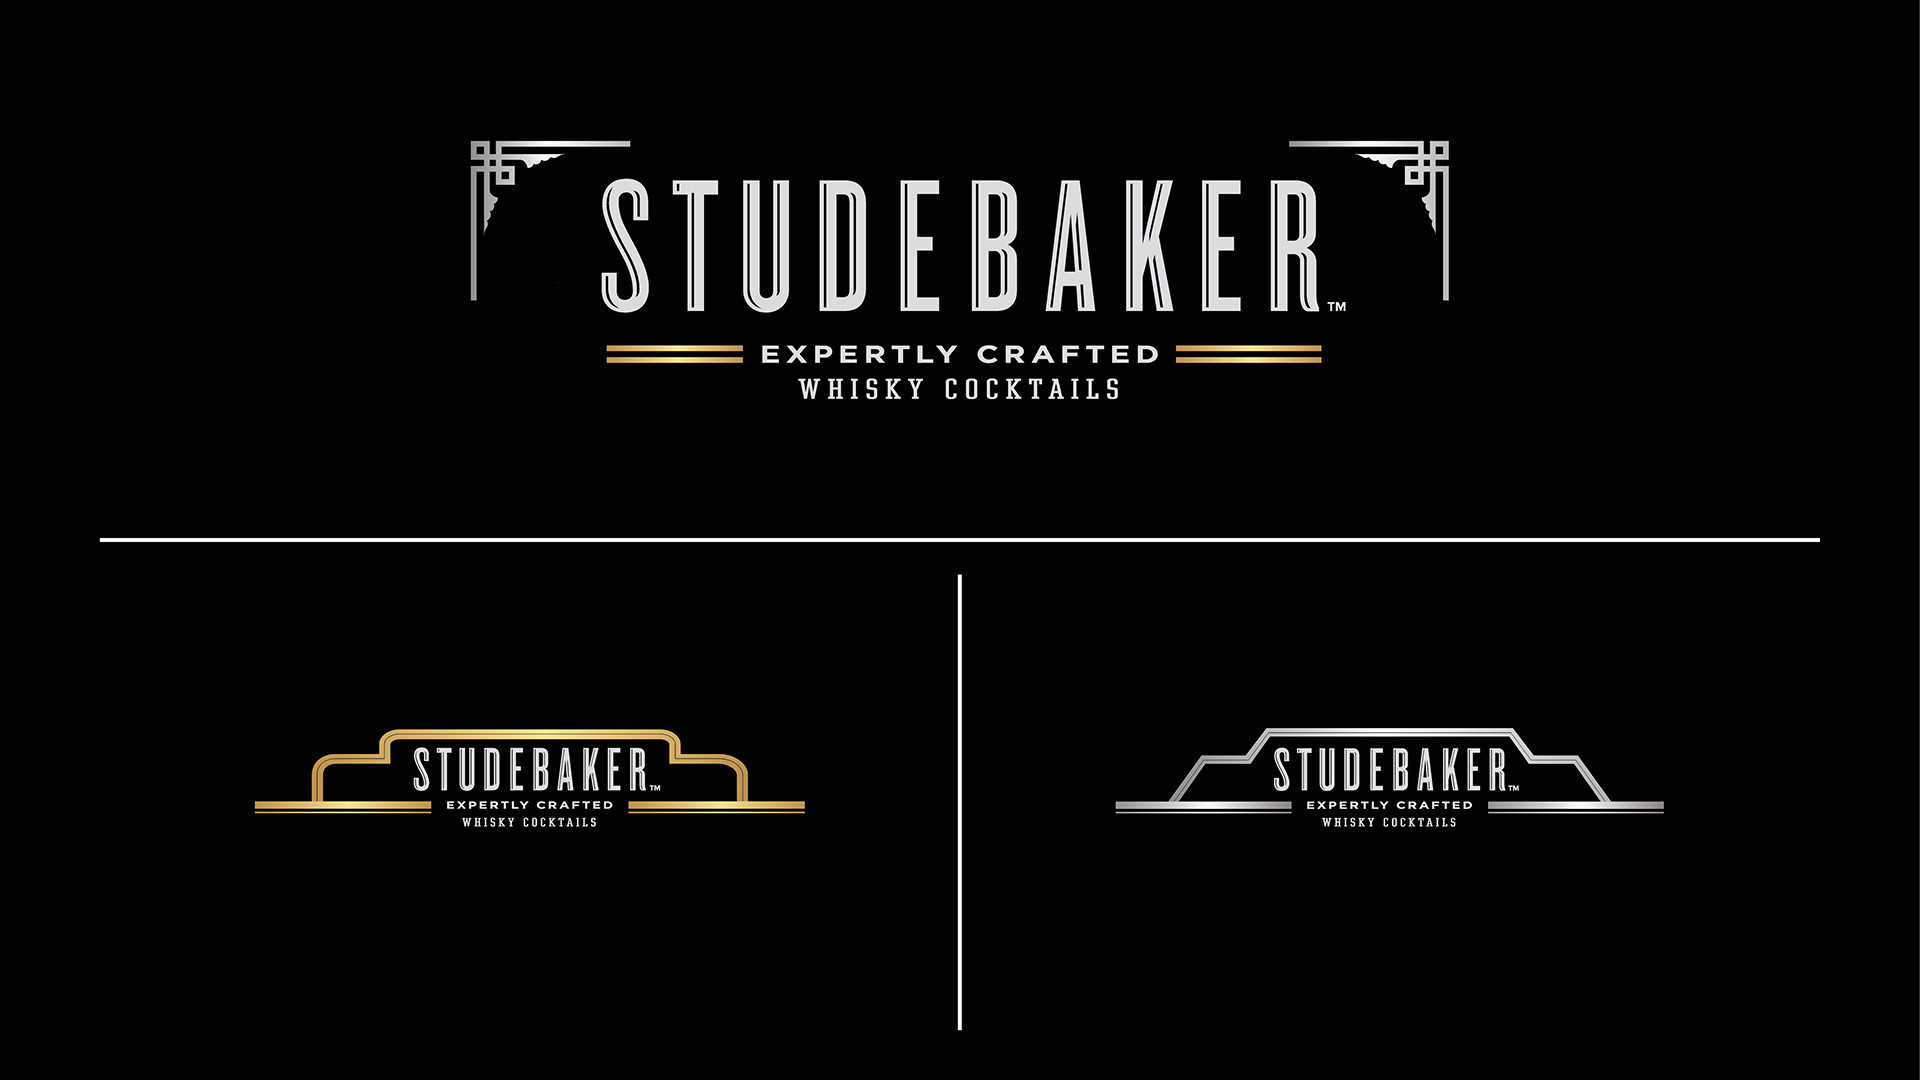 Oz Mfg. Company Studebaker Cocktails Art Deco Logos Graphic Design